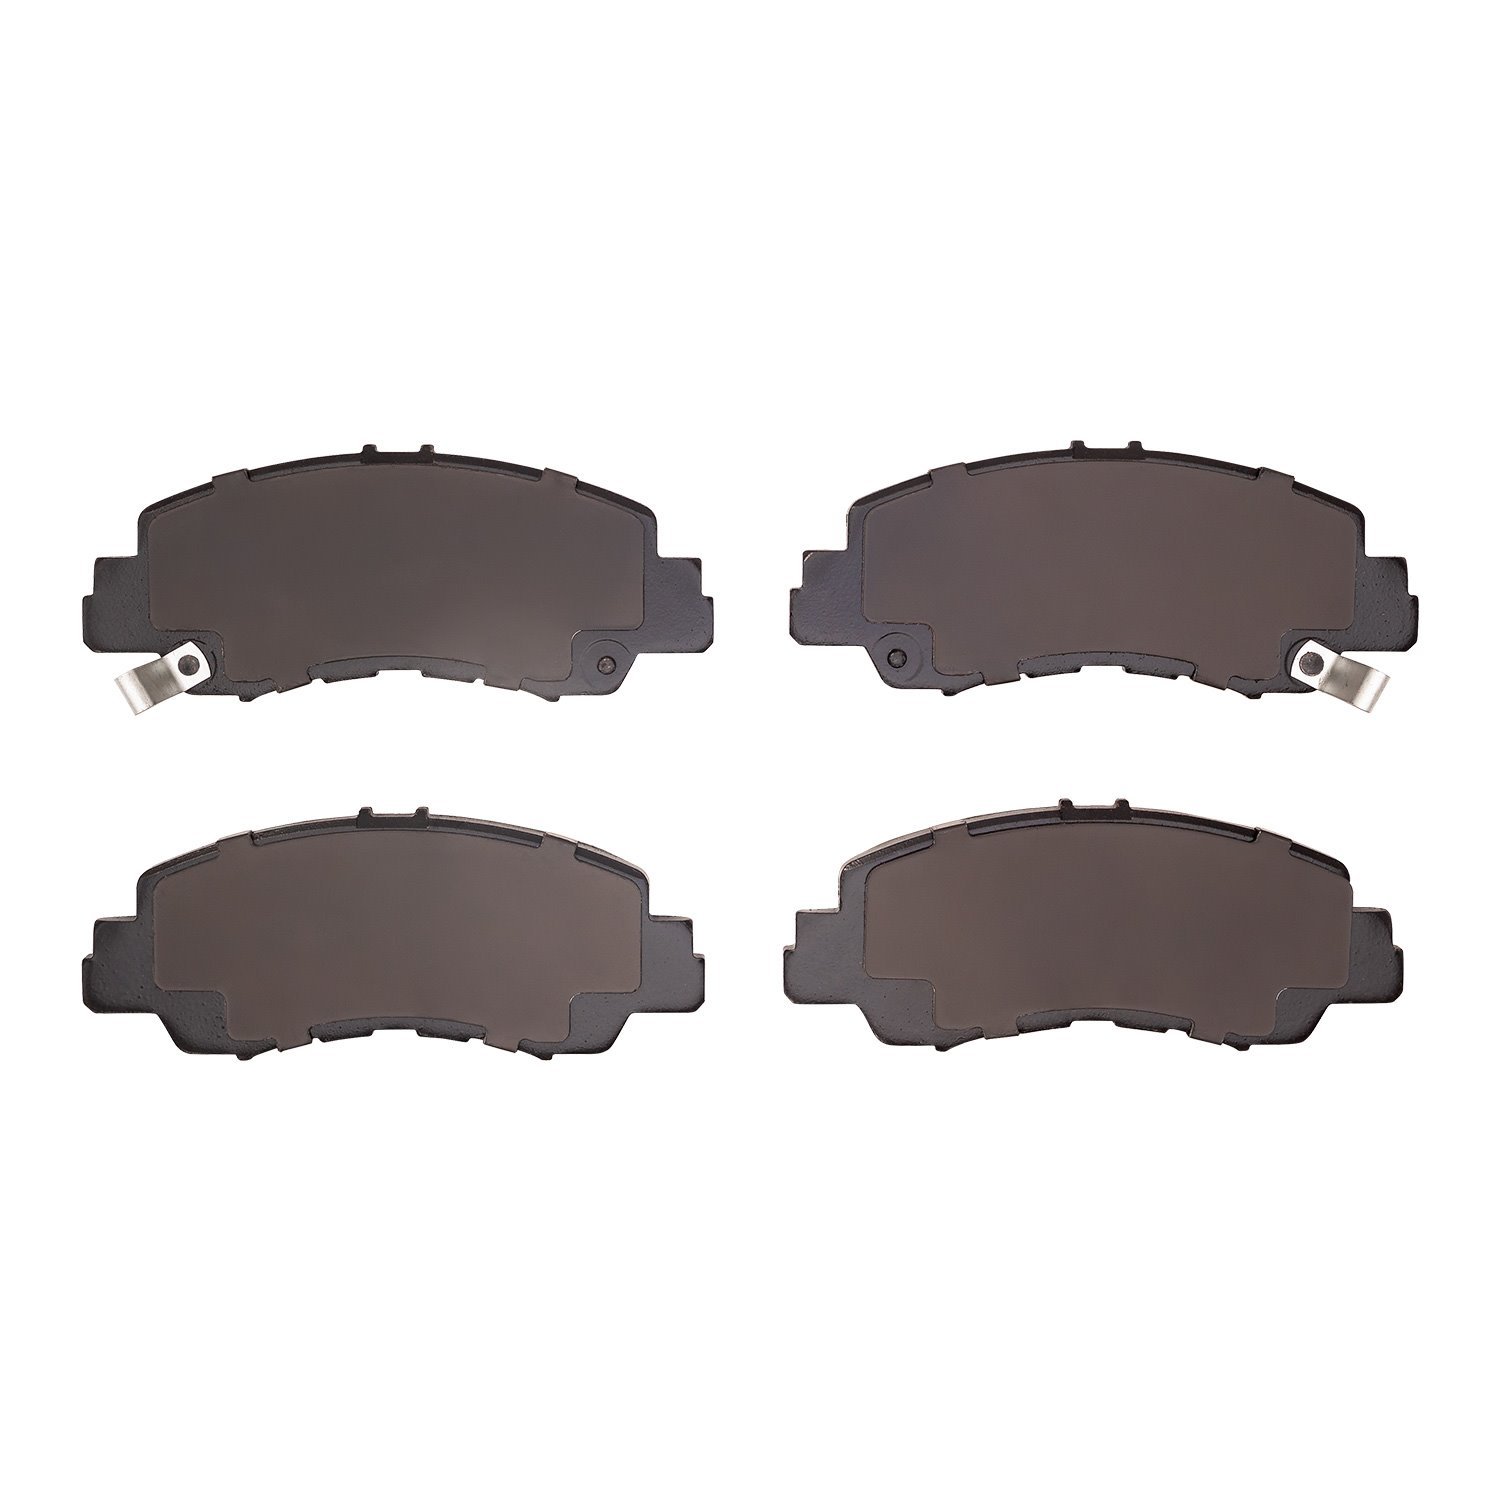 1310-2178-00 3000-Series Ceramic Brake Pads, Fits Select Mitsubishi, Position: Front